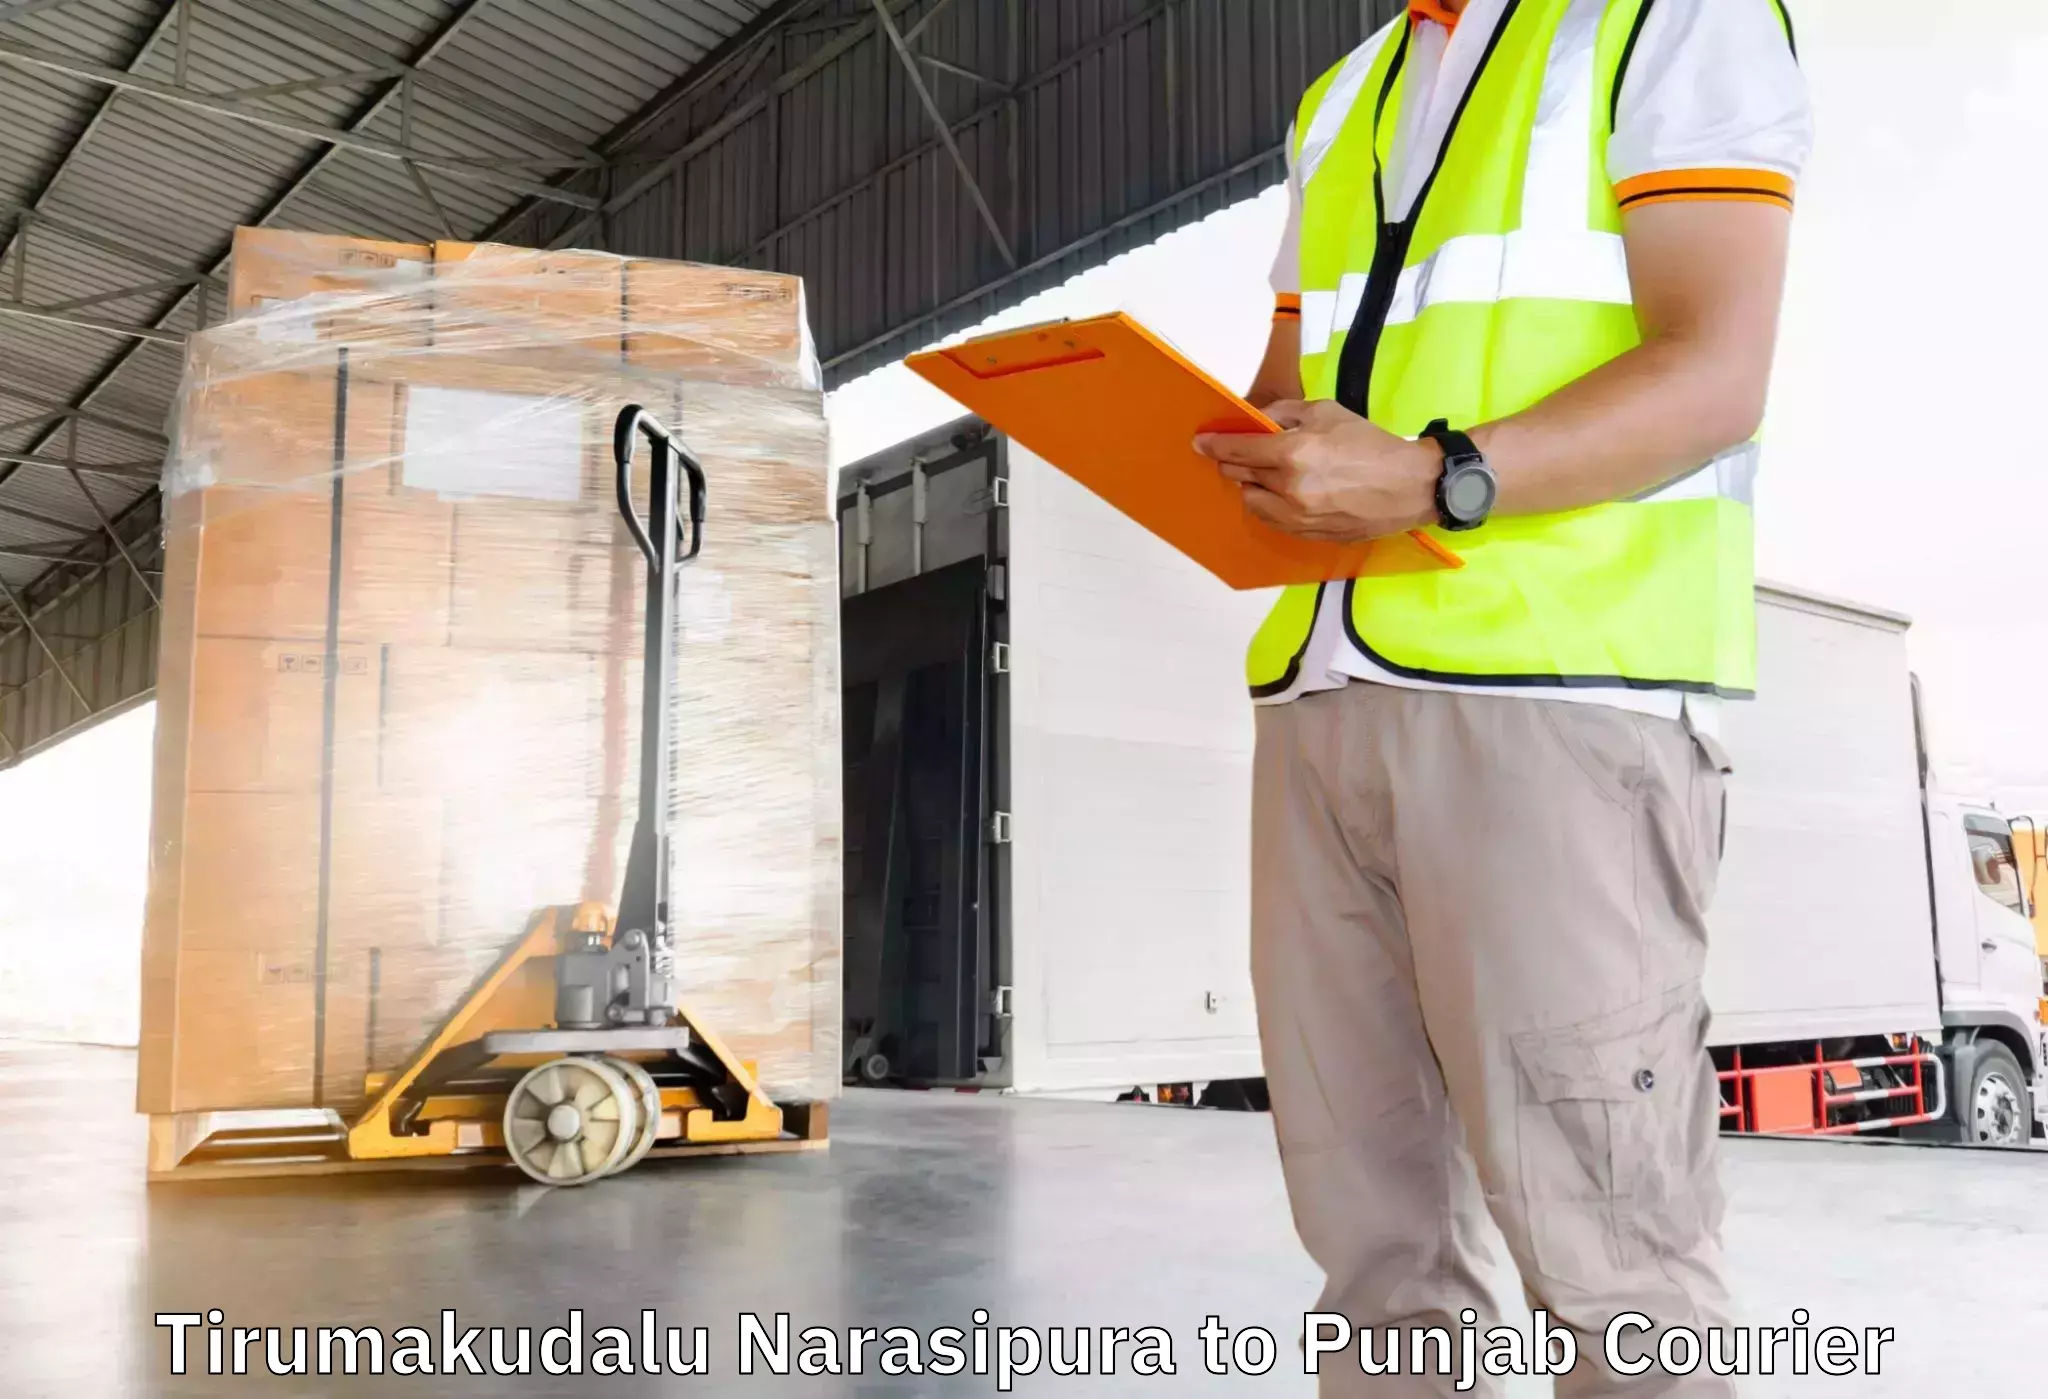 Efficient moving company Tirumakudalu Narasipura to Phagwara